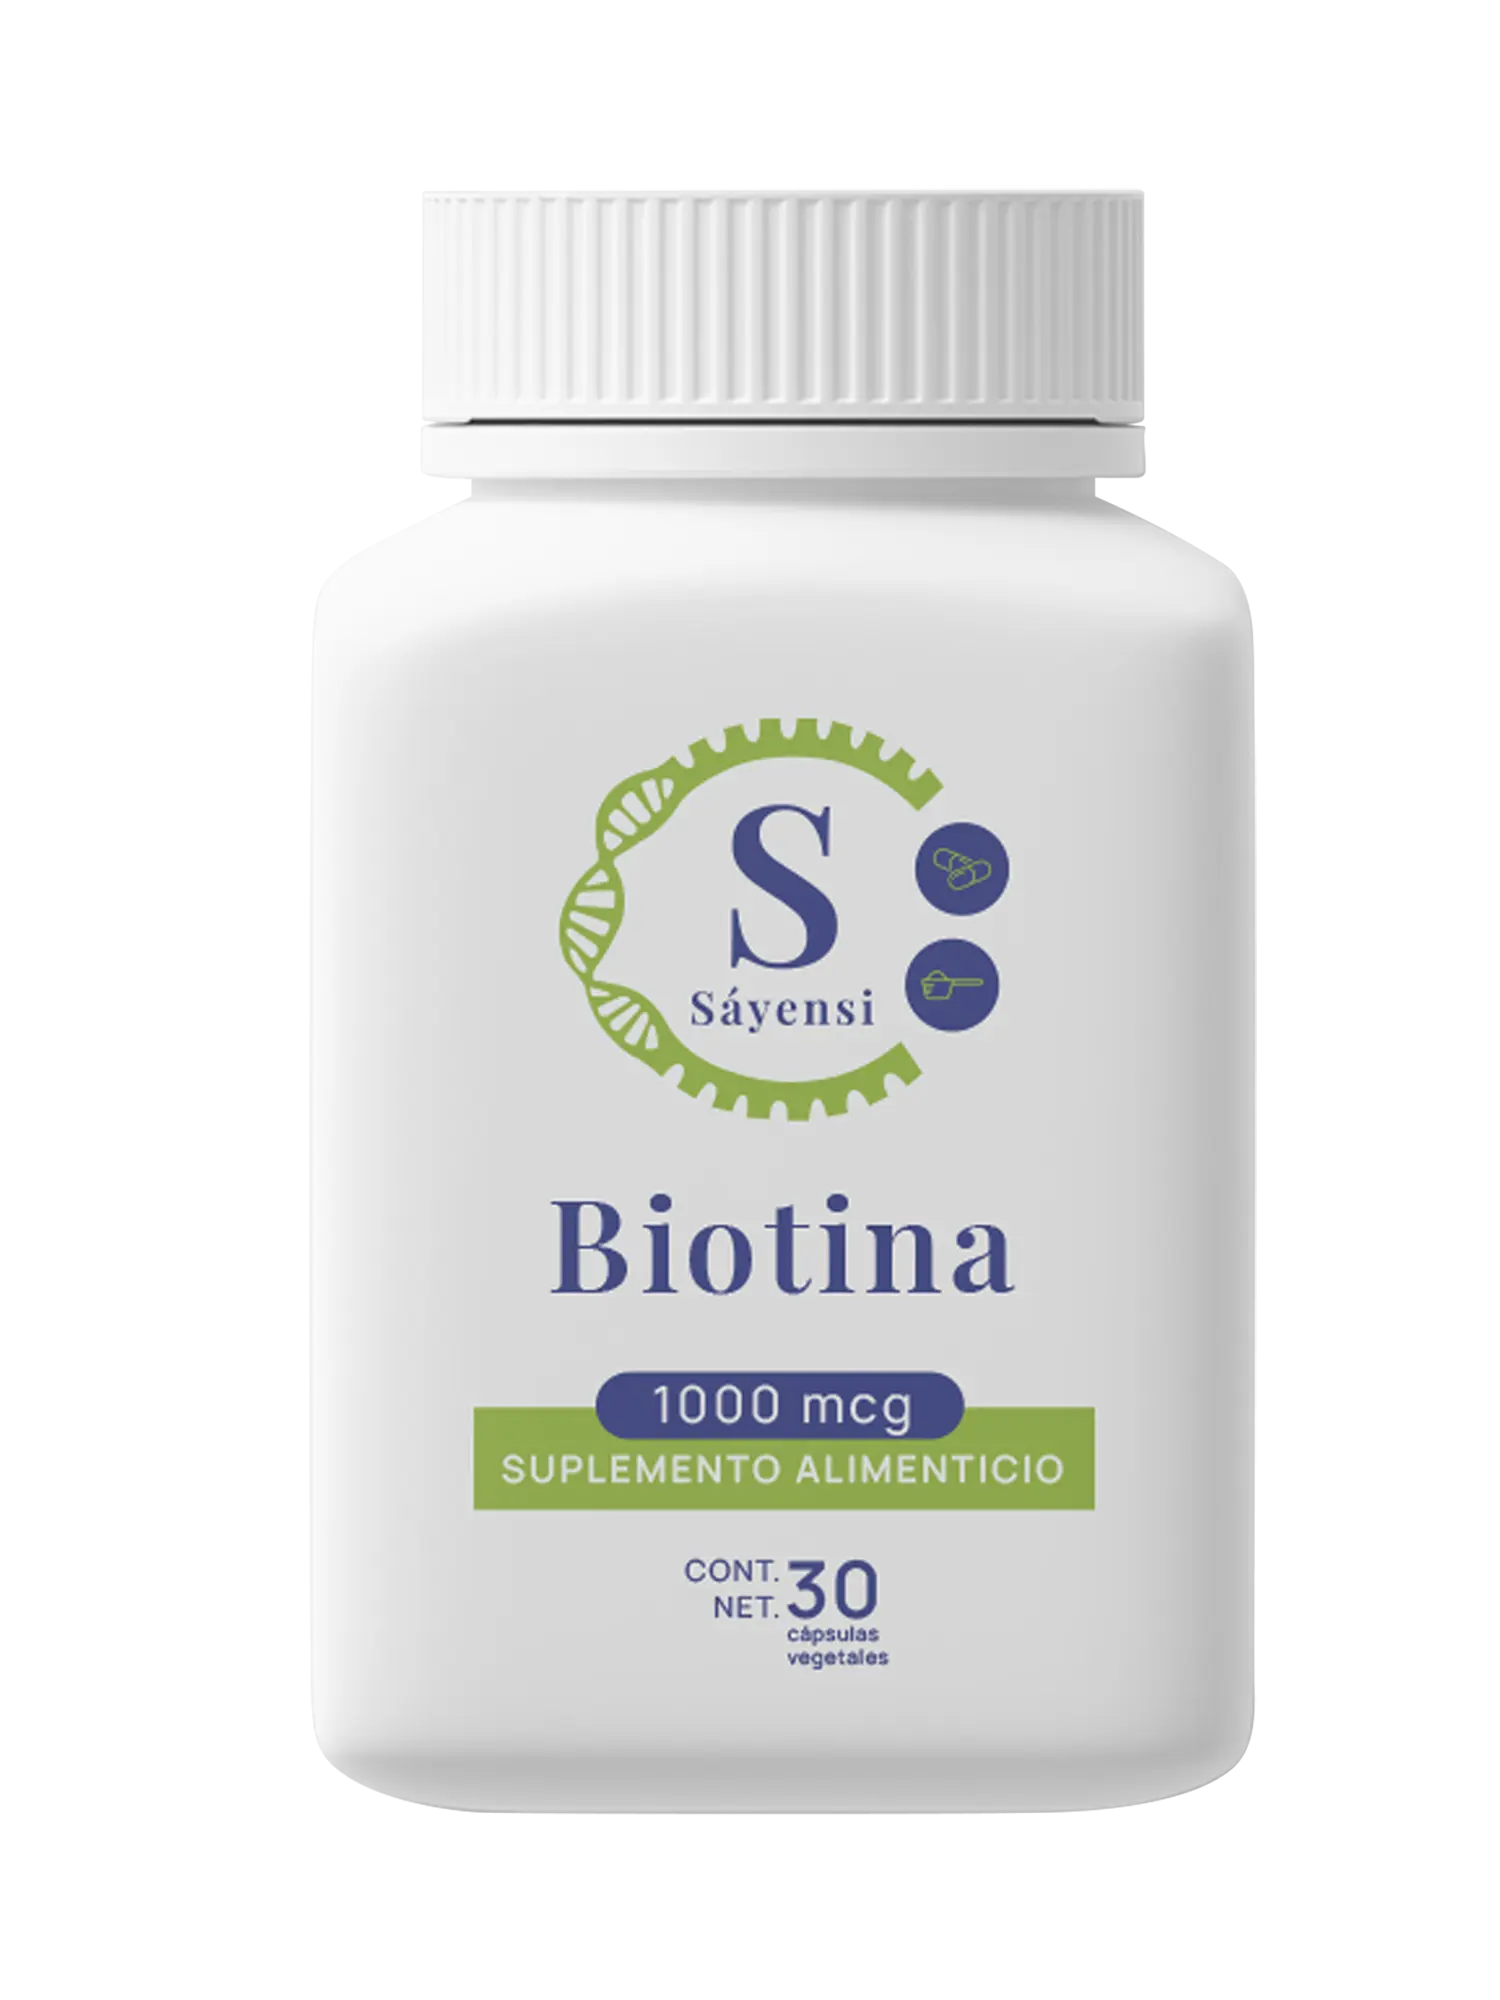 Biotina Sáyensi - 1000mcg - PURESUPPLY